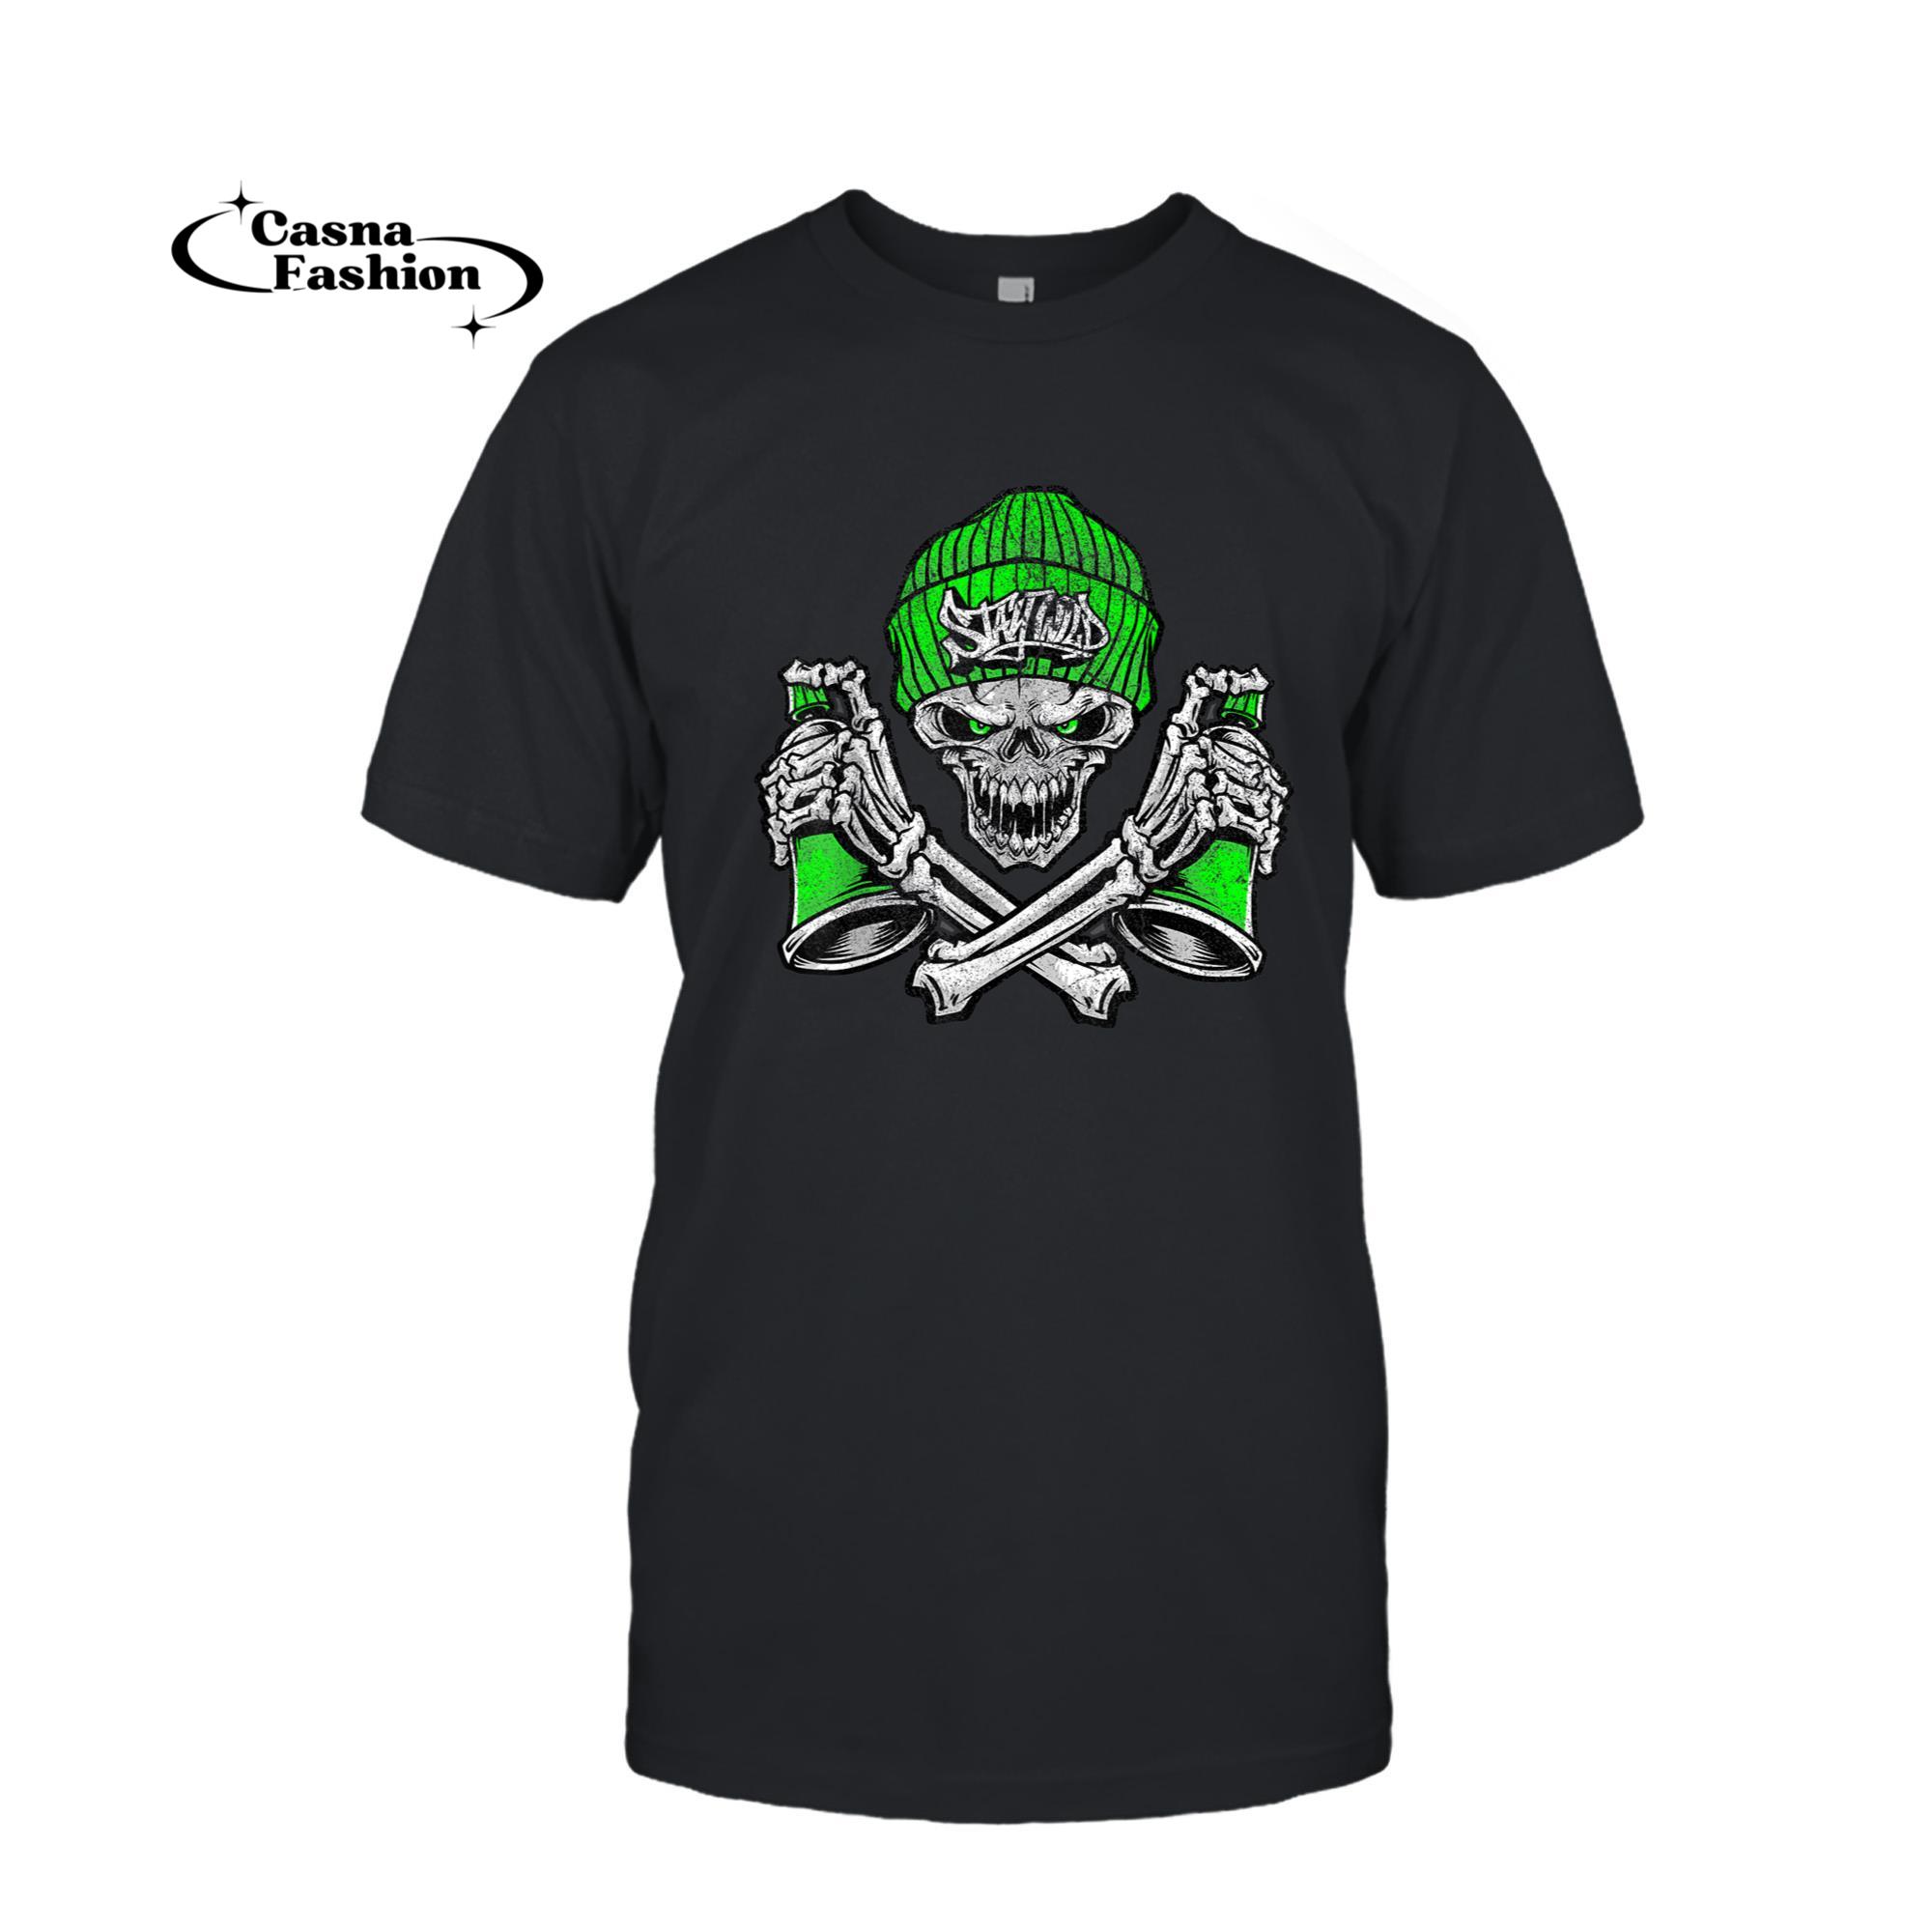 casnafashion_T-shirt_Graffiti Skull Graphic Tee Street Art Lover Tee Musician T-Shirt_T-shirt_Black